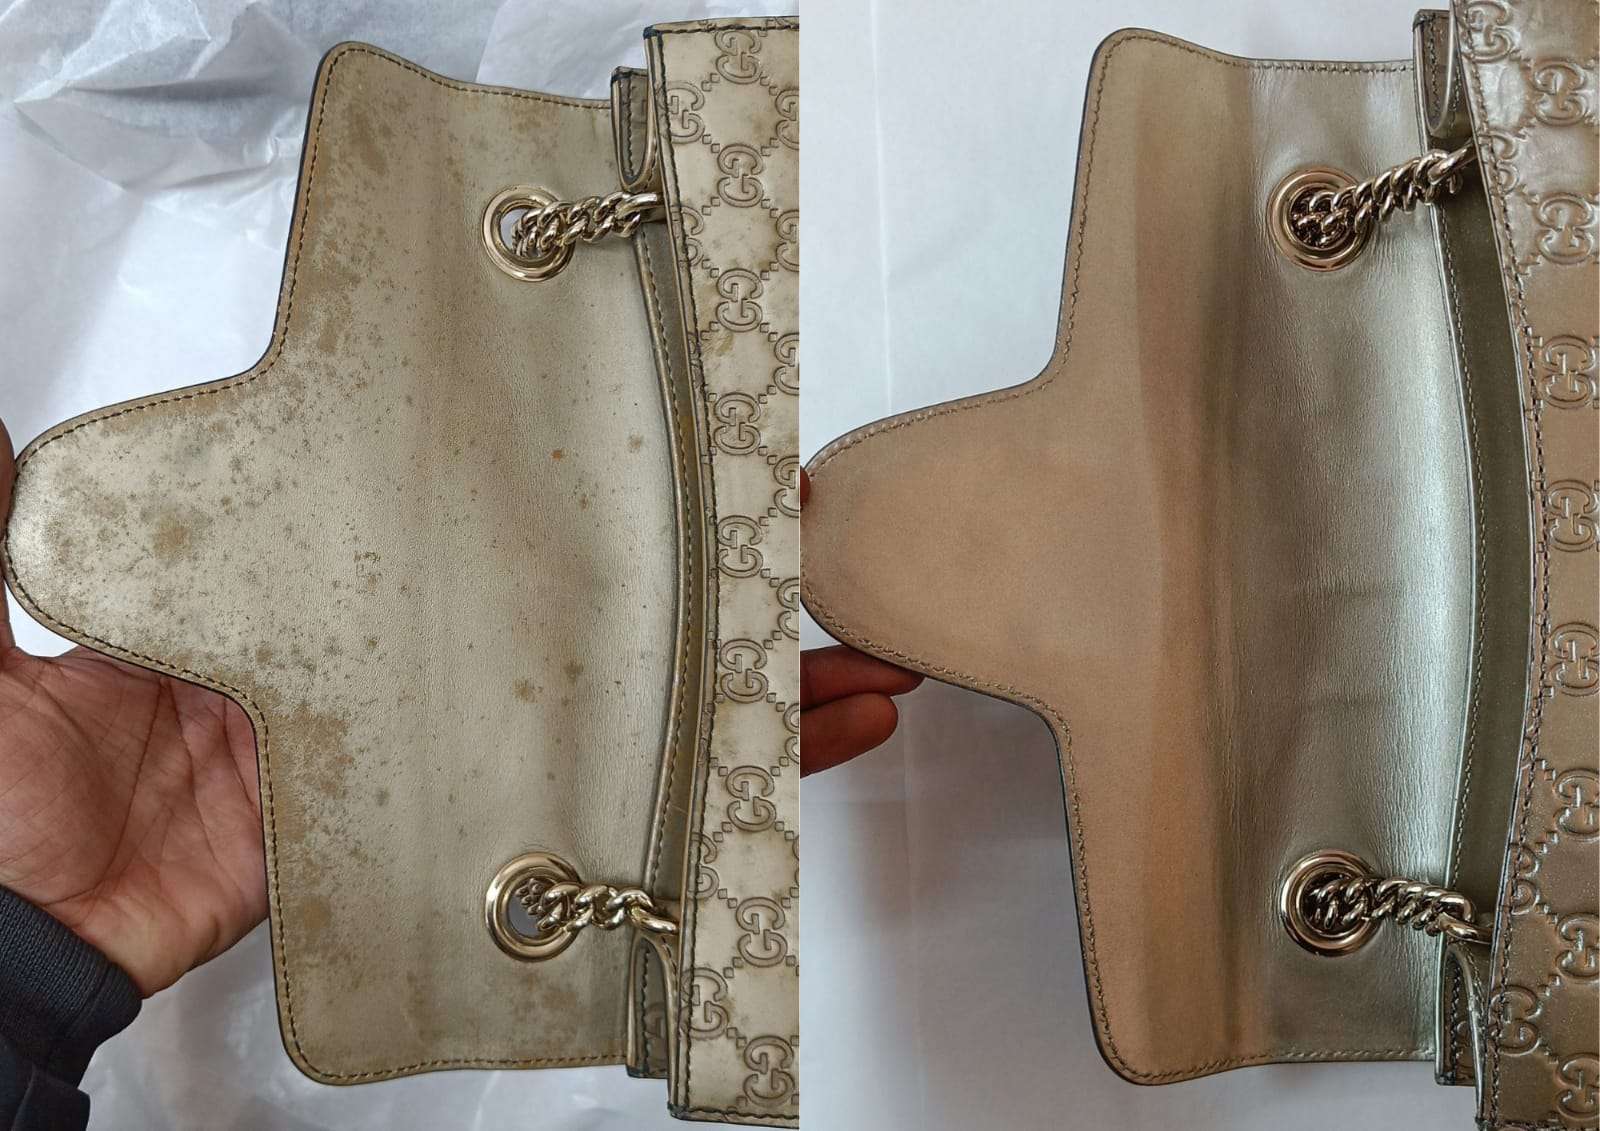 Gucci Mettalic bag Restoration